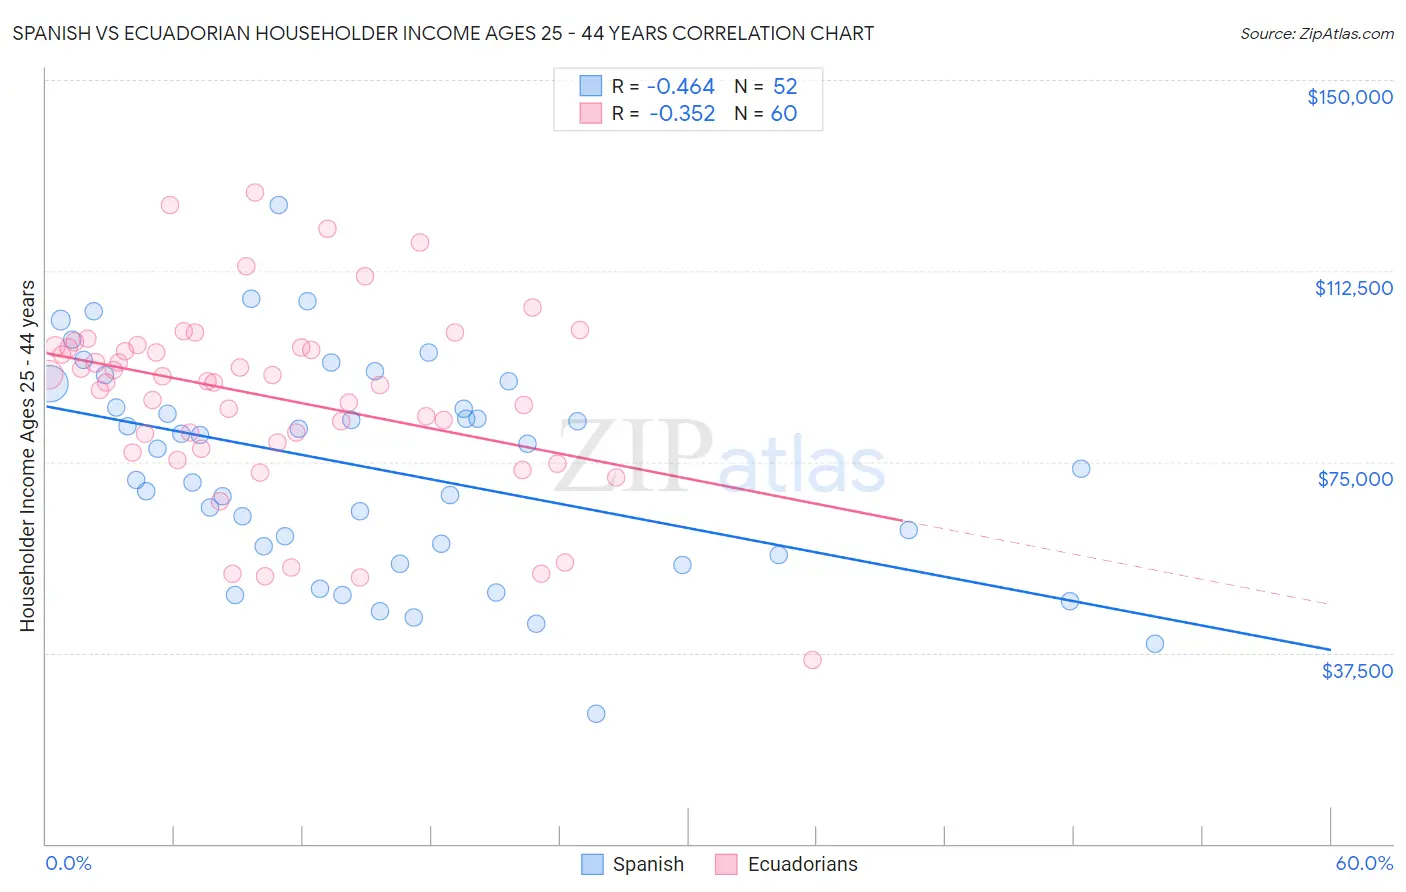 Spanish vs Ecuadorian Householder Income Ages 25 - 44 years